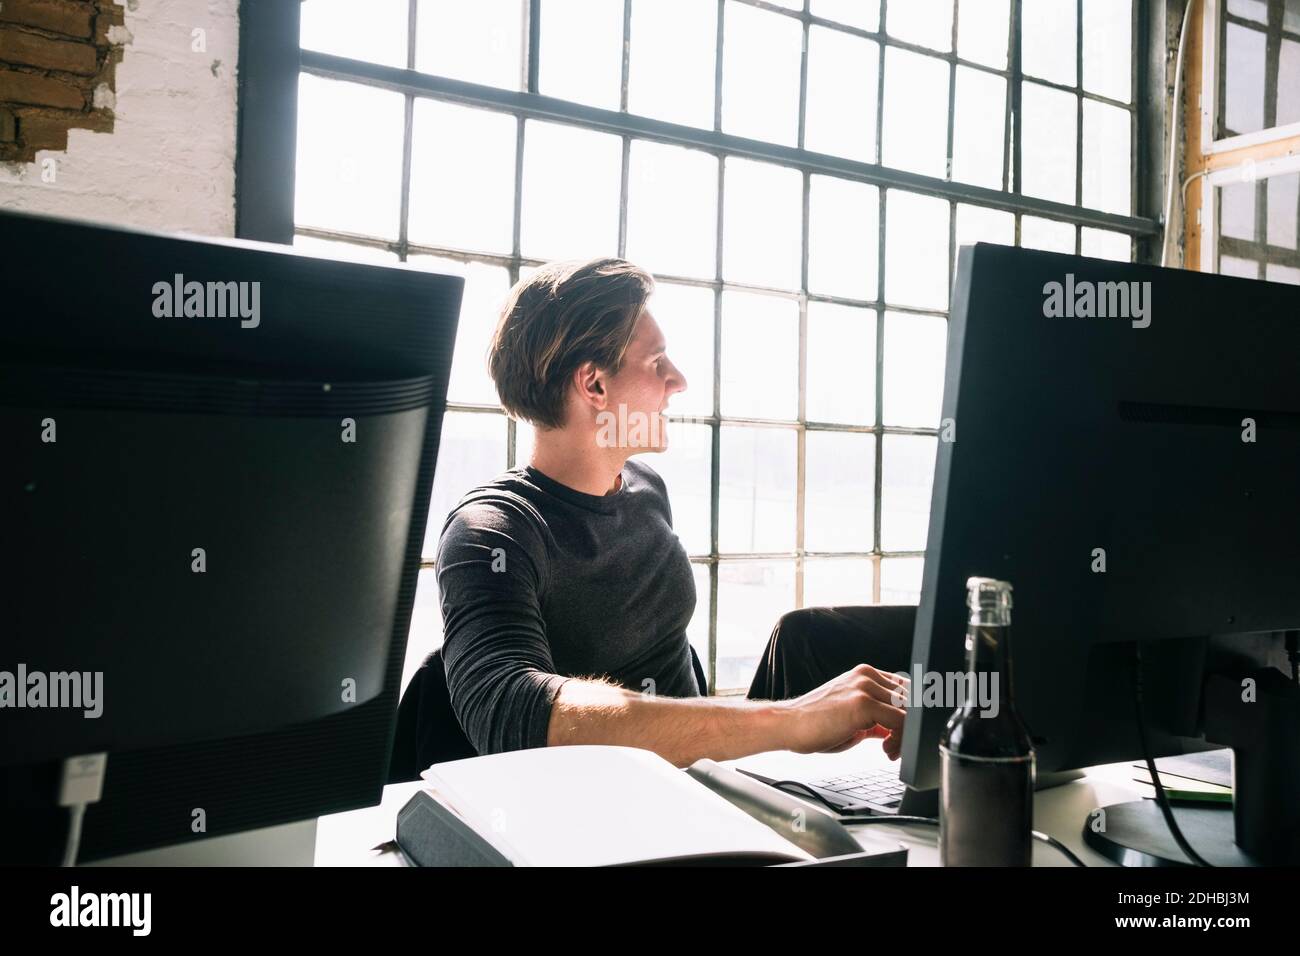 Junger männlicher Hacker schaut weg, während er am Computertisch sitzt Am kreativen Arbeitsplatz Stockfoto